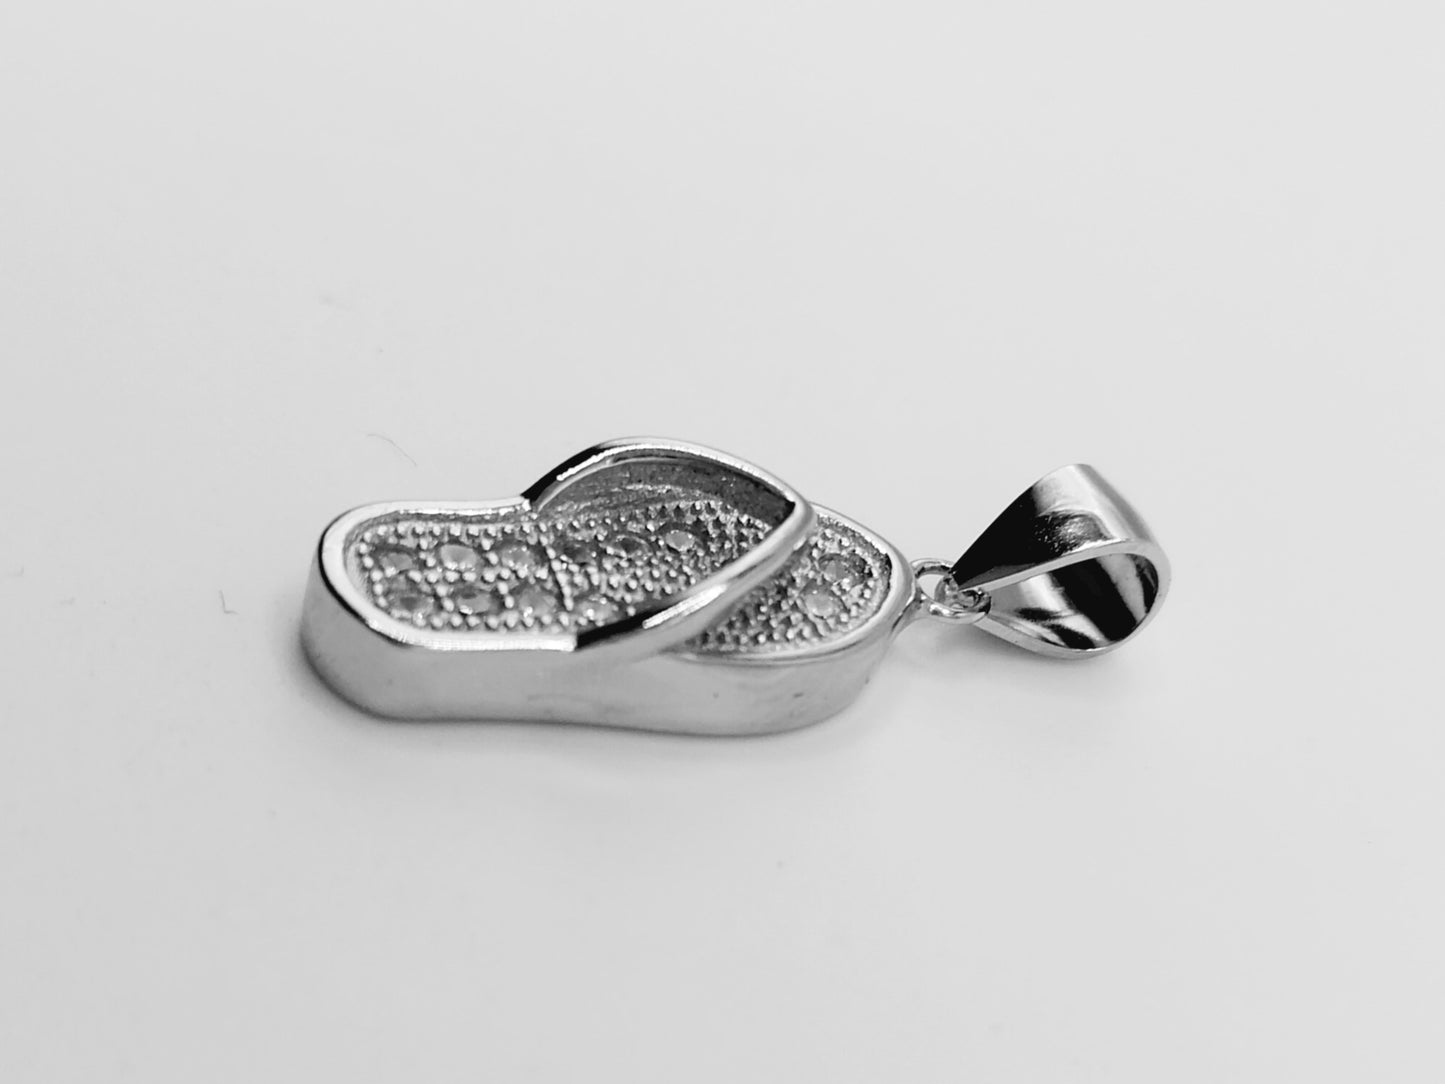 Flip-Flop Beach Sandal Pendant Silver 925 with Cubic Zirconia Stones